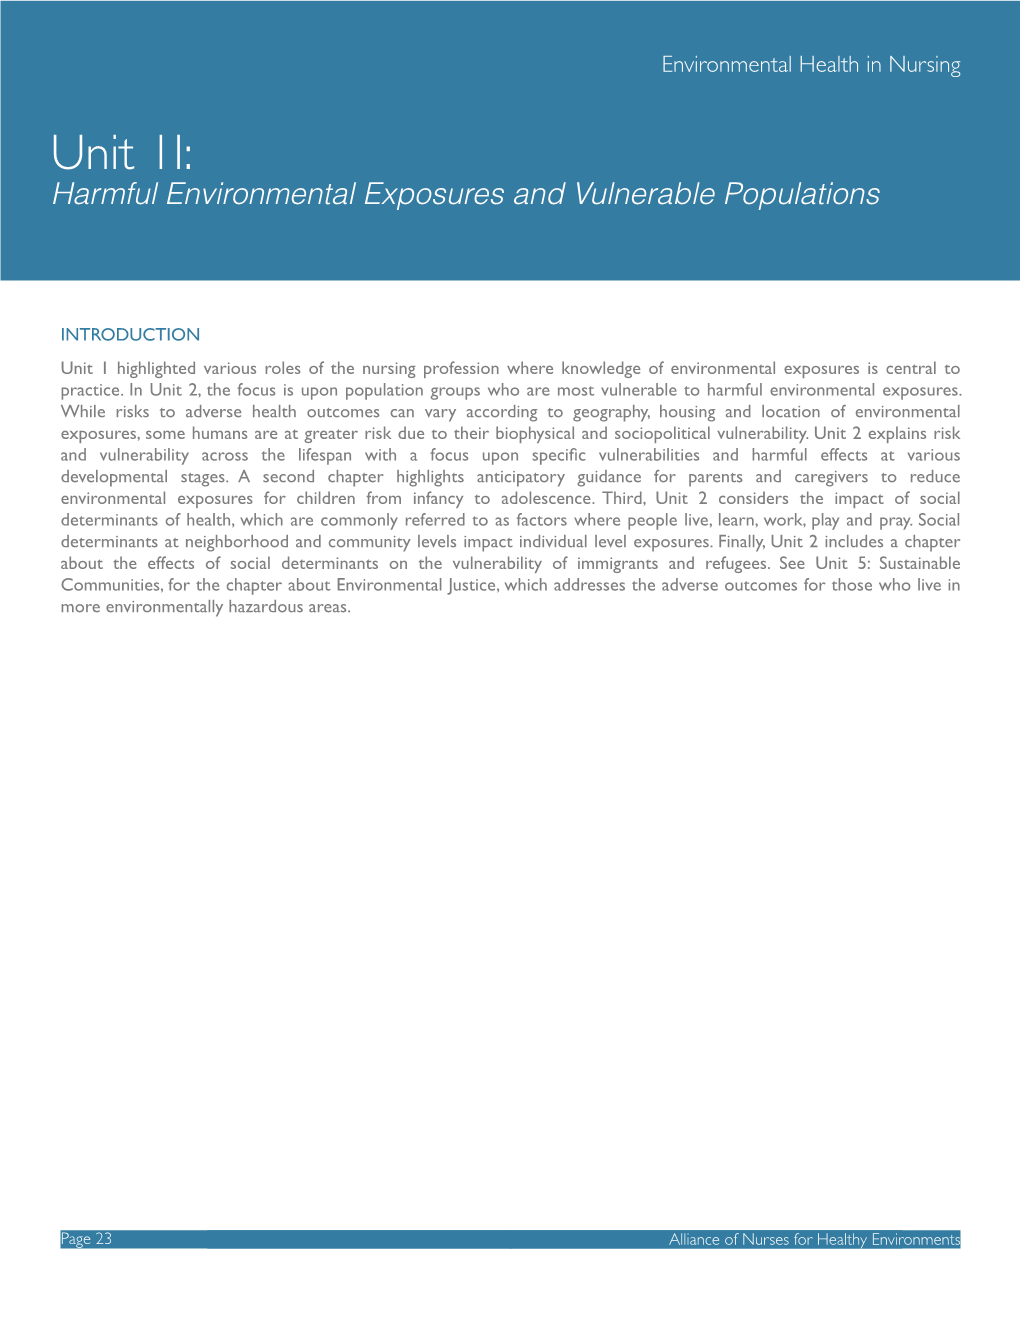 Harmful Environmental Exposures and Vulnerable Populations Environmental Health in Nursing